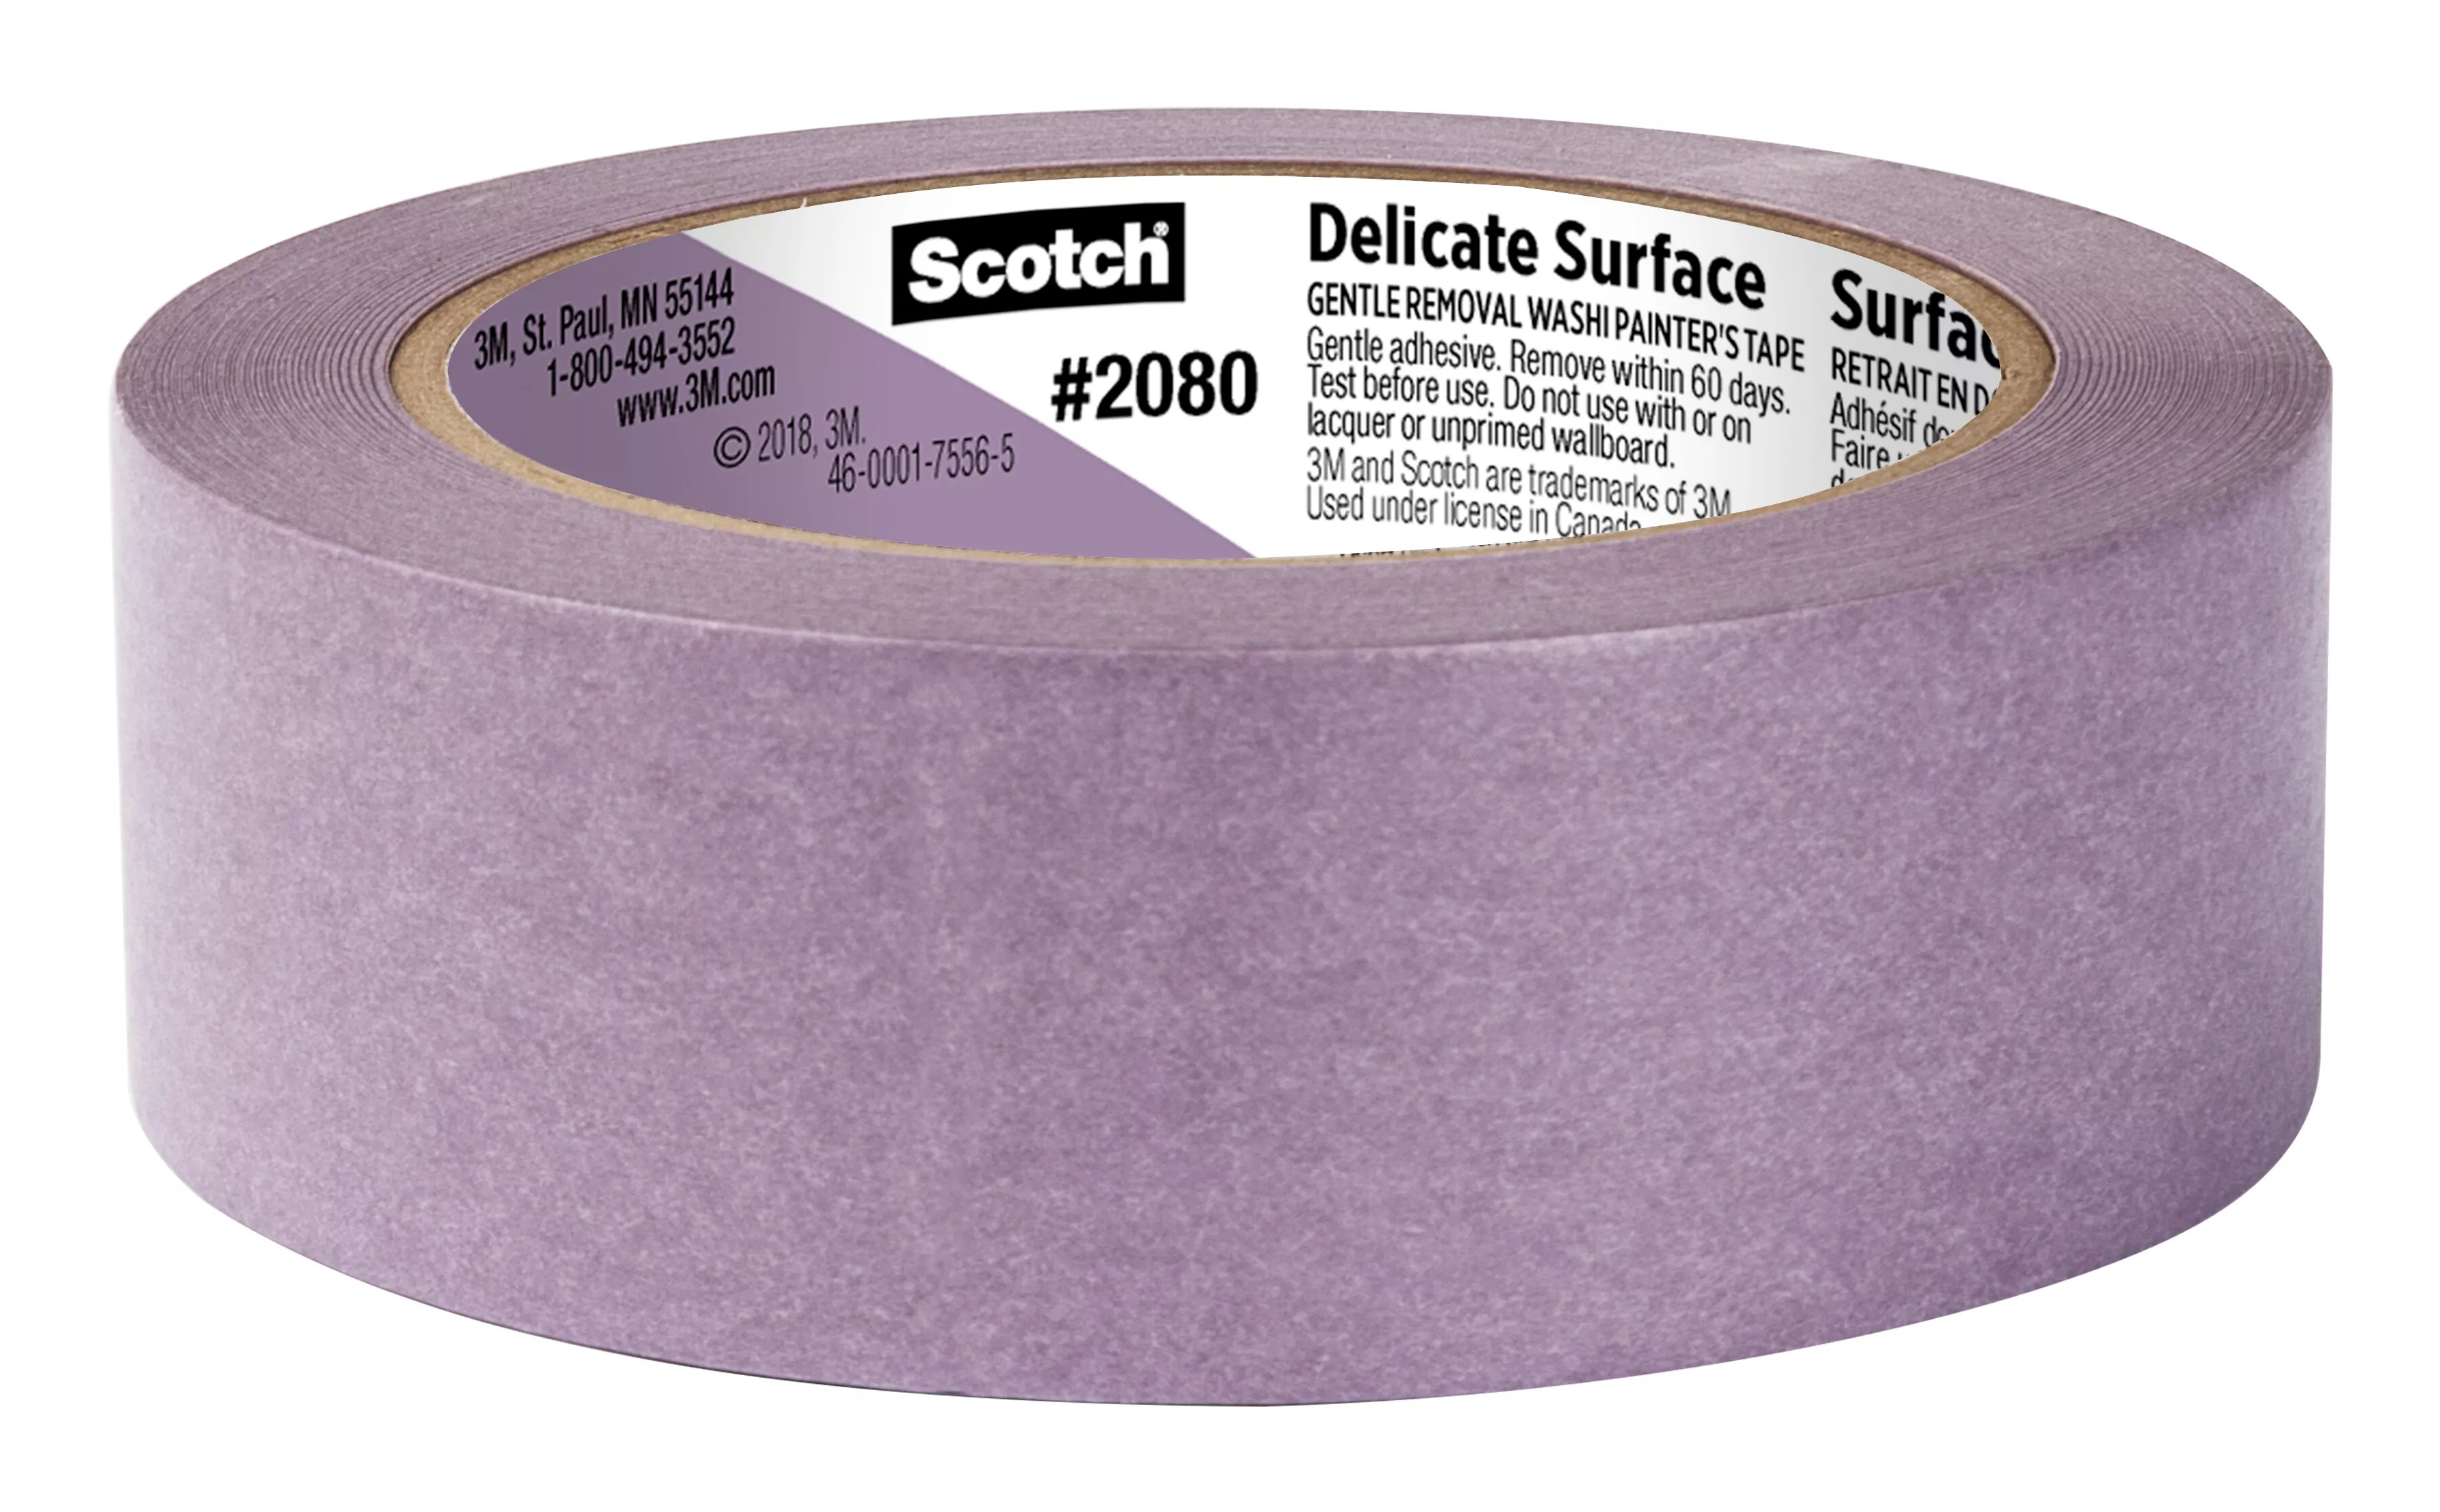 SKU 7100185010 | Scotch® Delicate Surface Painter's Tape 2080-36EC